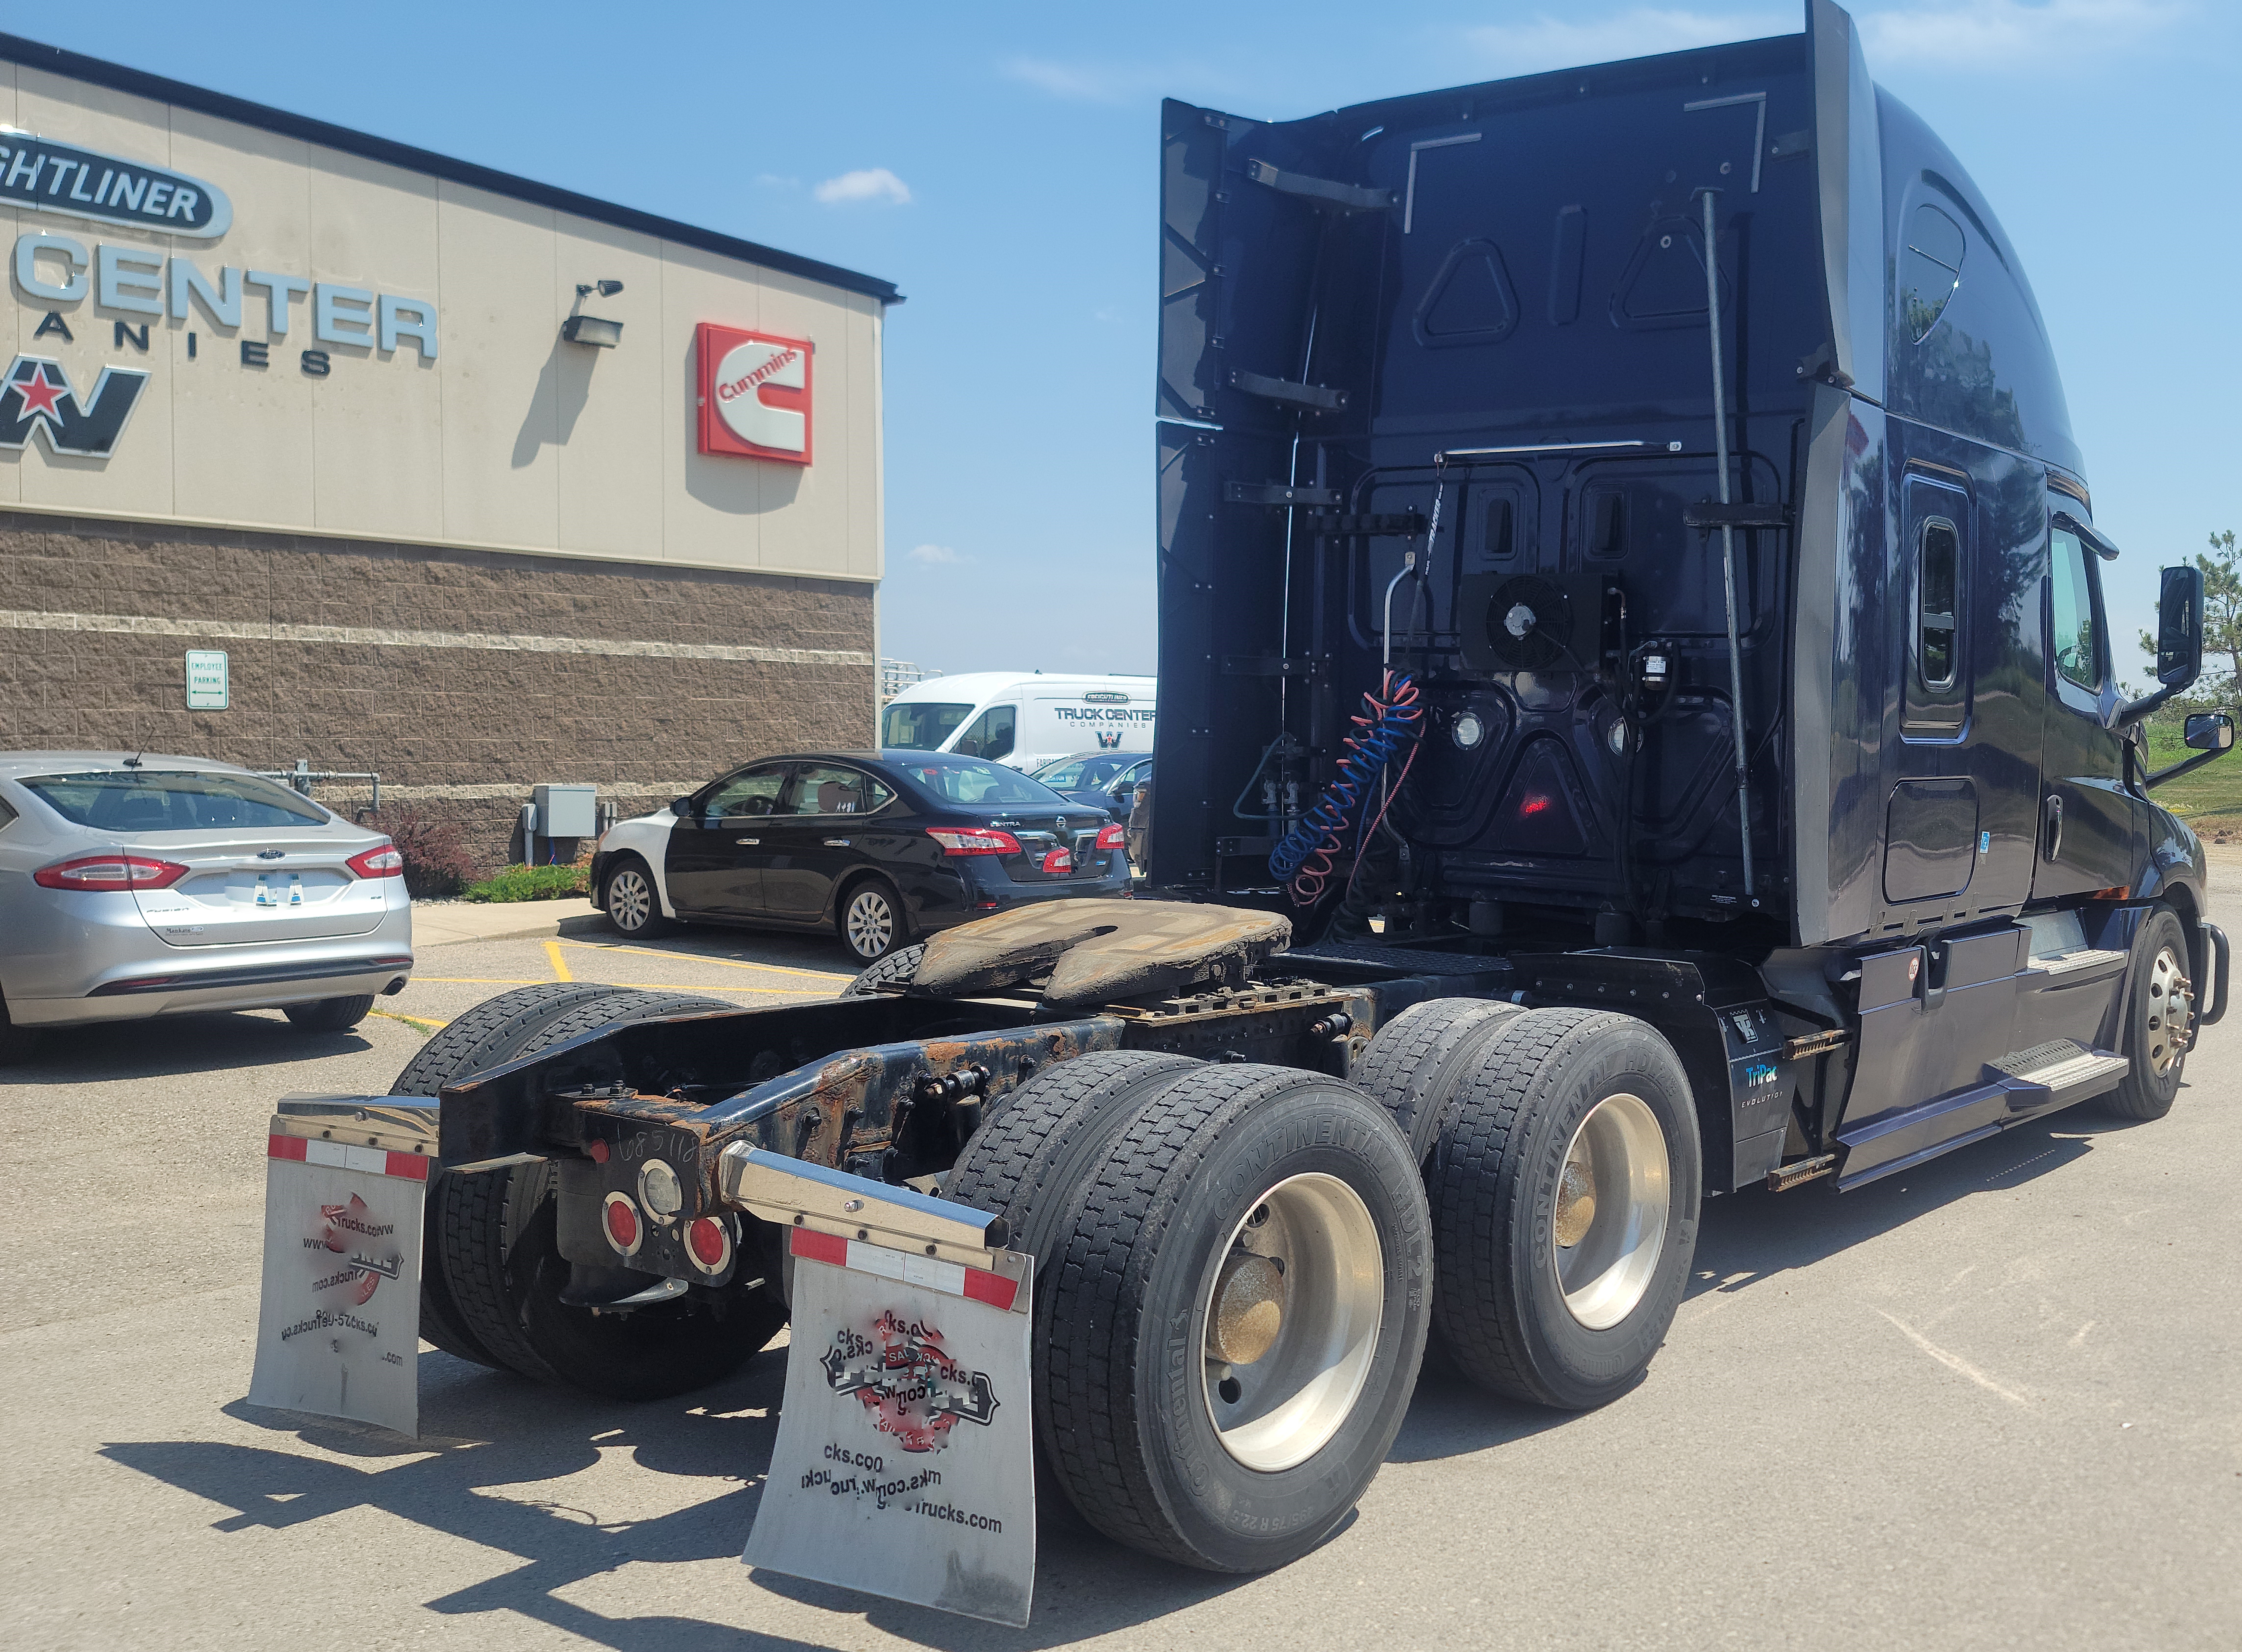 Freightliner New Cascadia® - D&K Truck Company